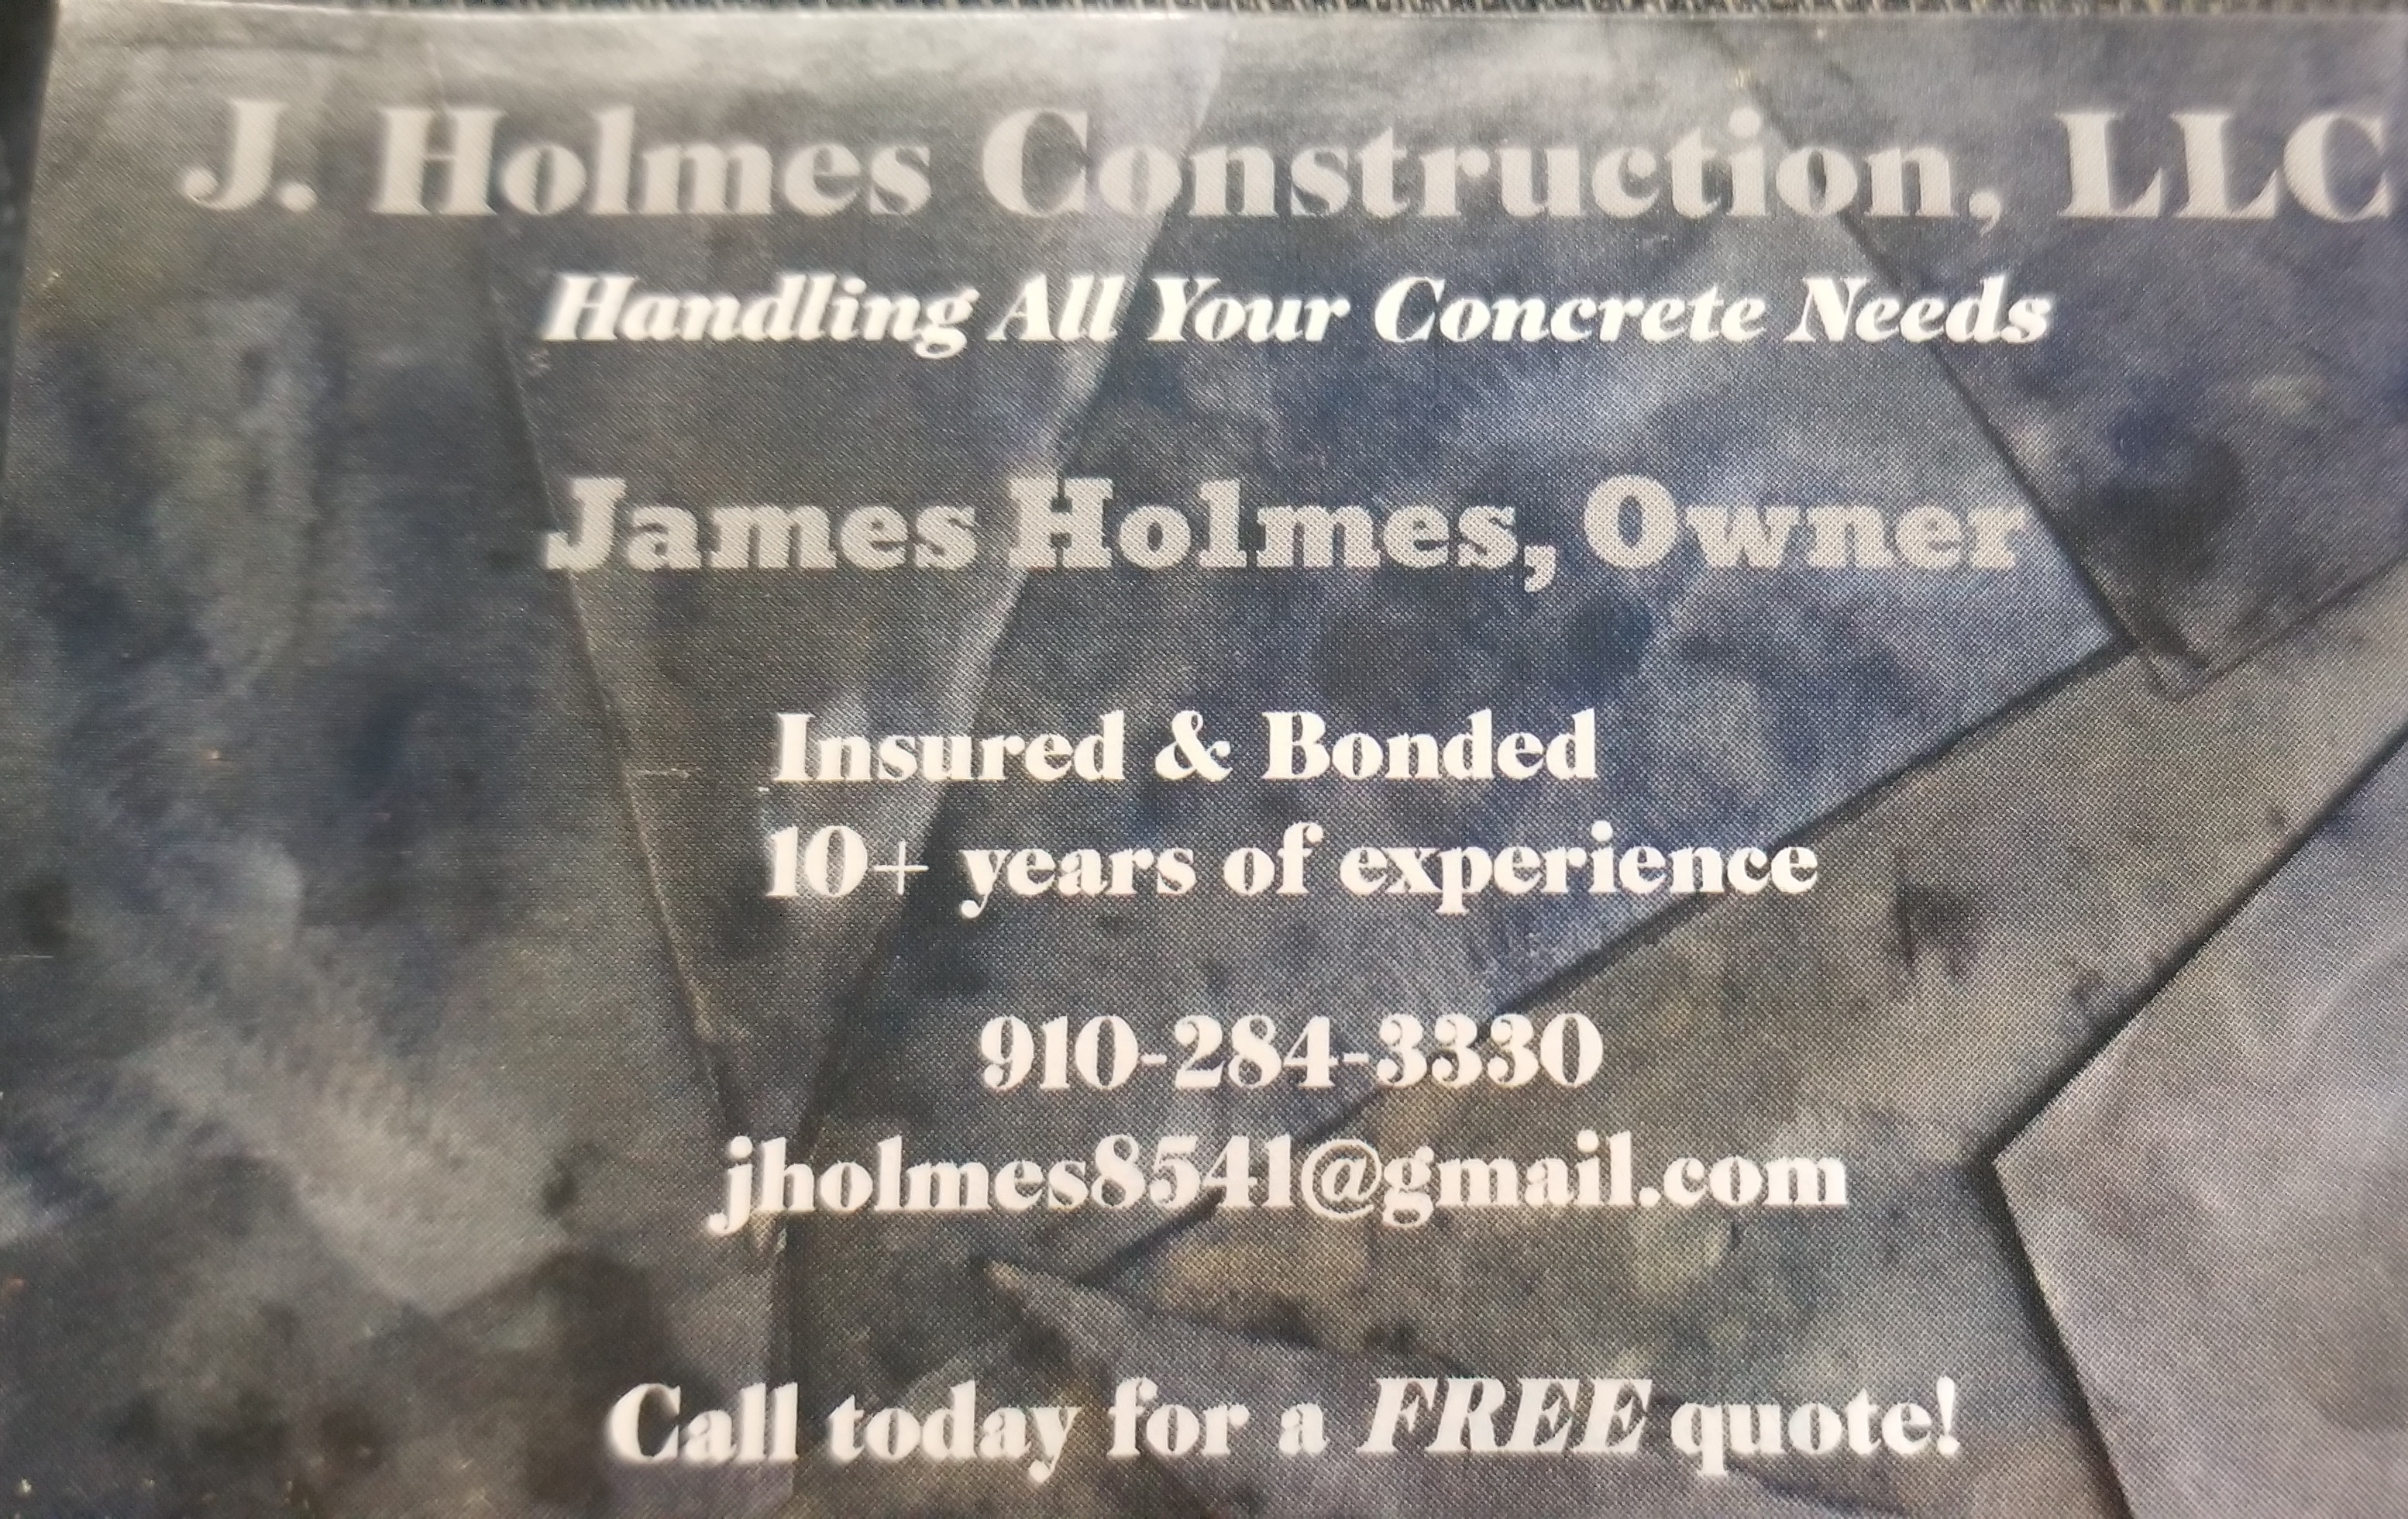 J. Holmes Construction Logo